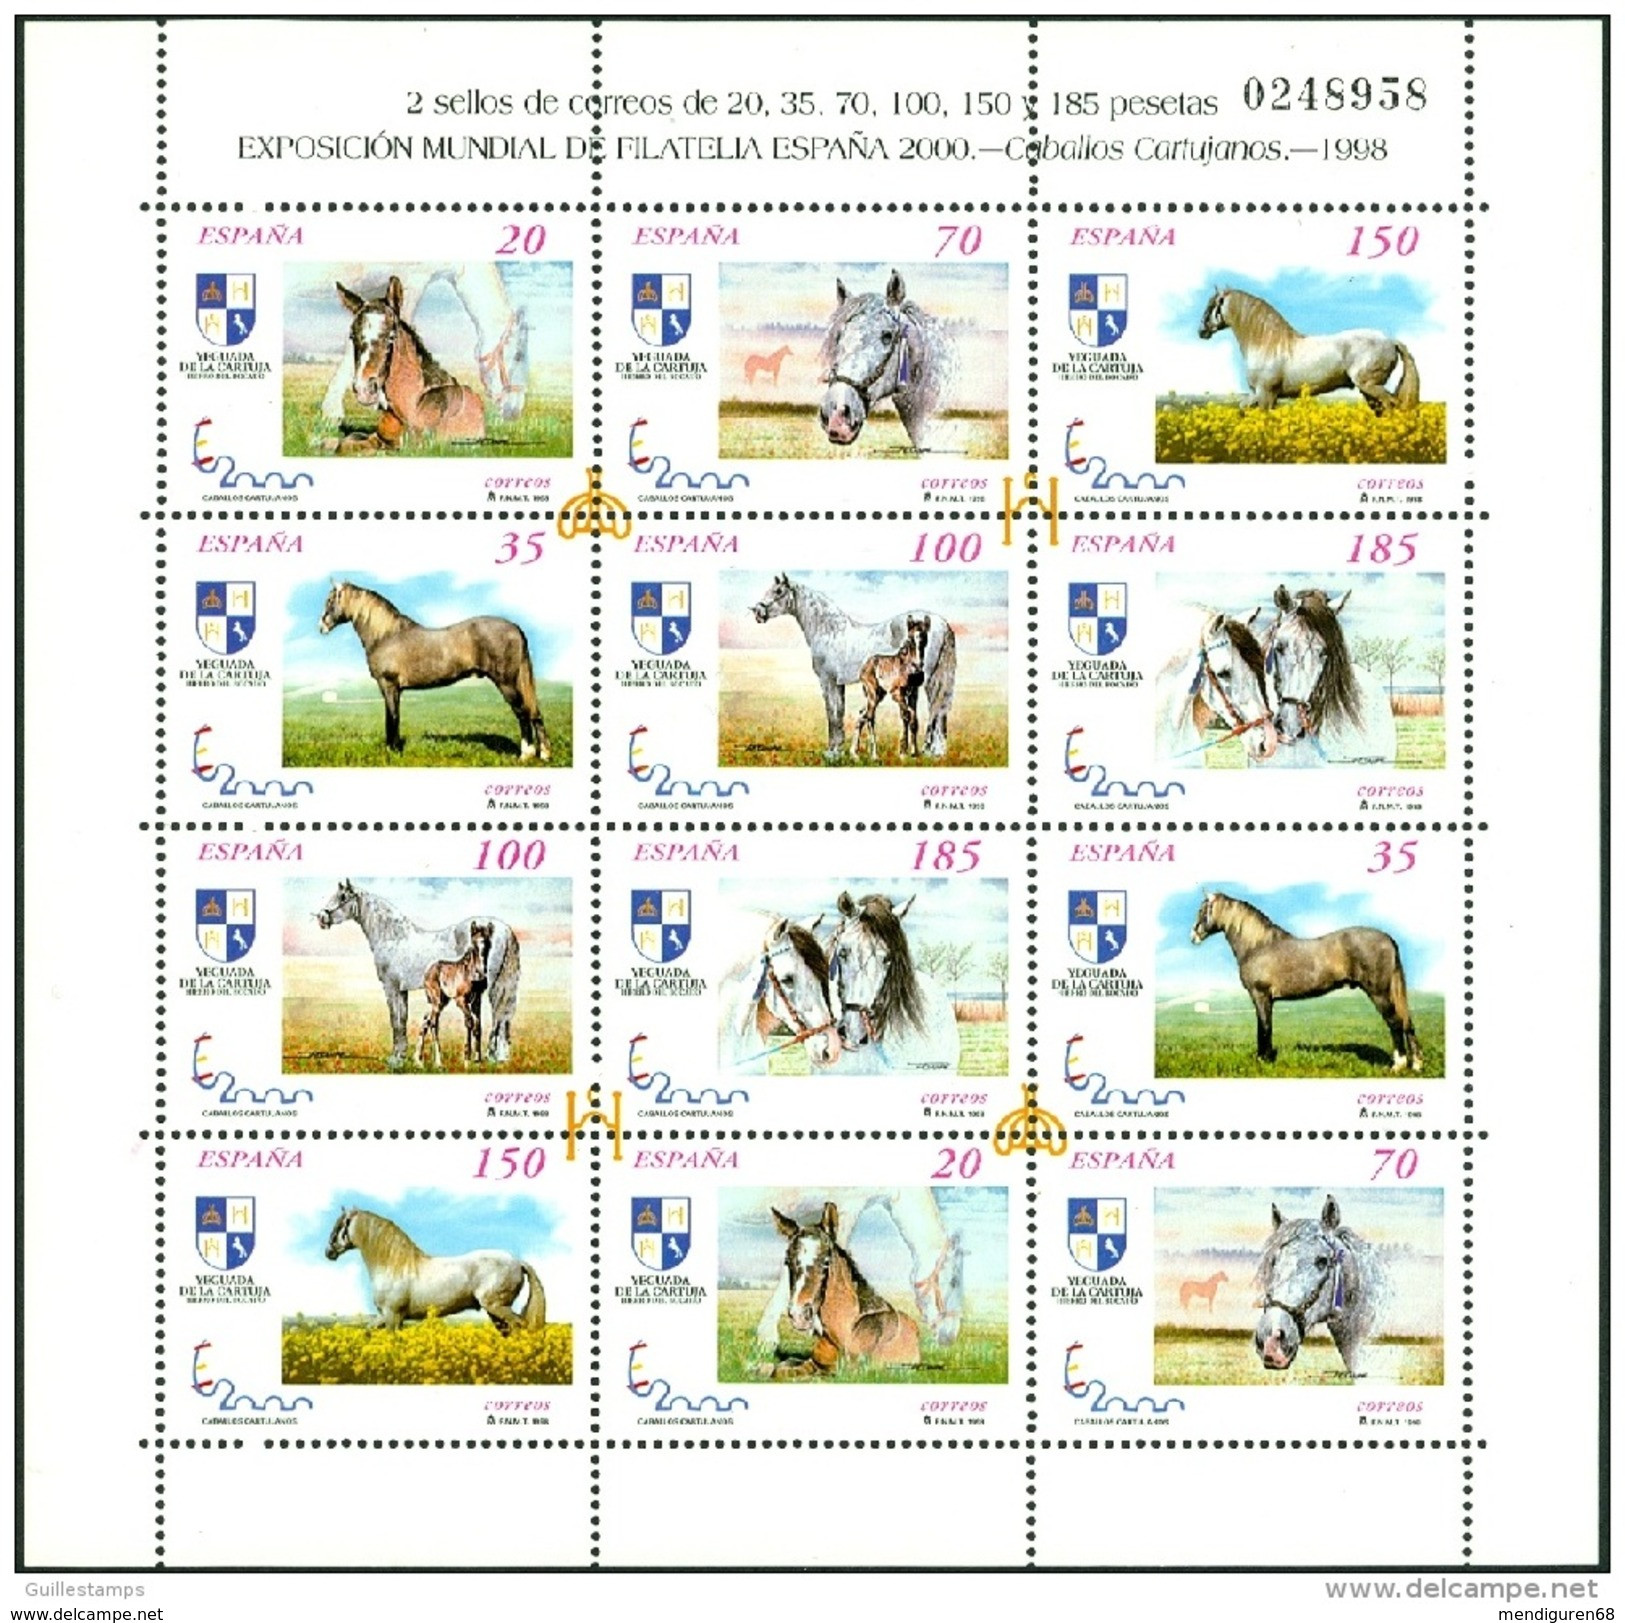 ESPAGNE ESPAÑA SPAIN ESPAÑA 1998 CARTUJAN HORSES Caballos Cartujanos MNH ED HB3608-13 Y 3177-3182a MI B-3443 I - 48 II - Blocs & Hojas